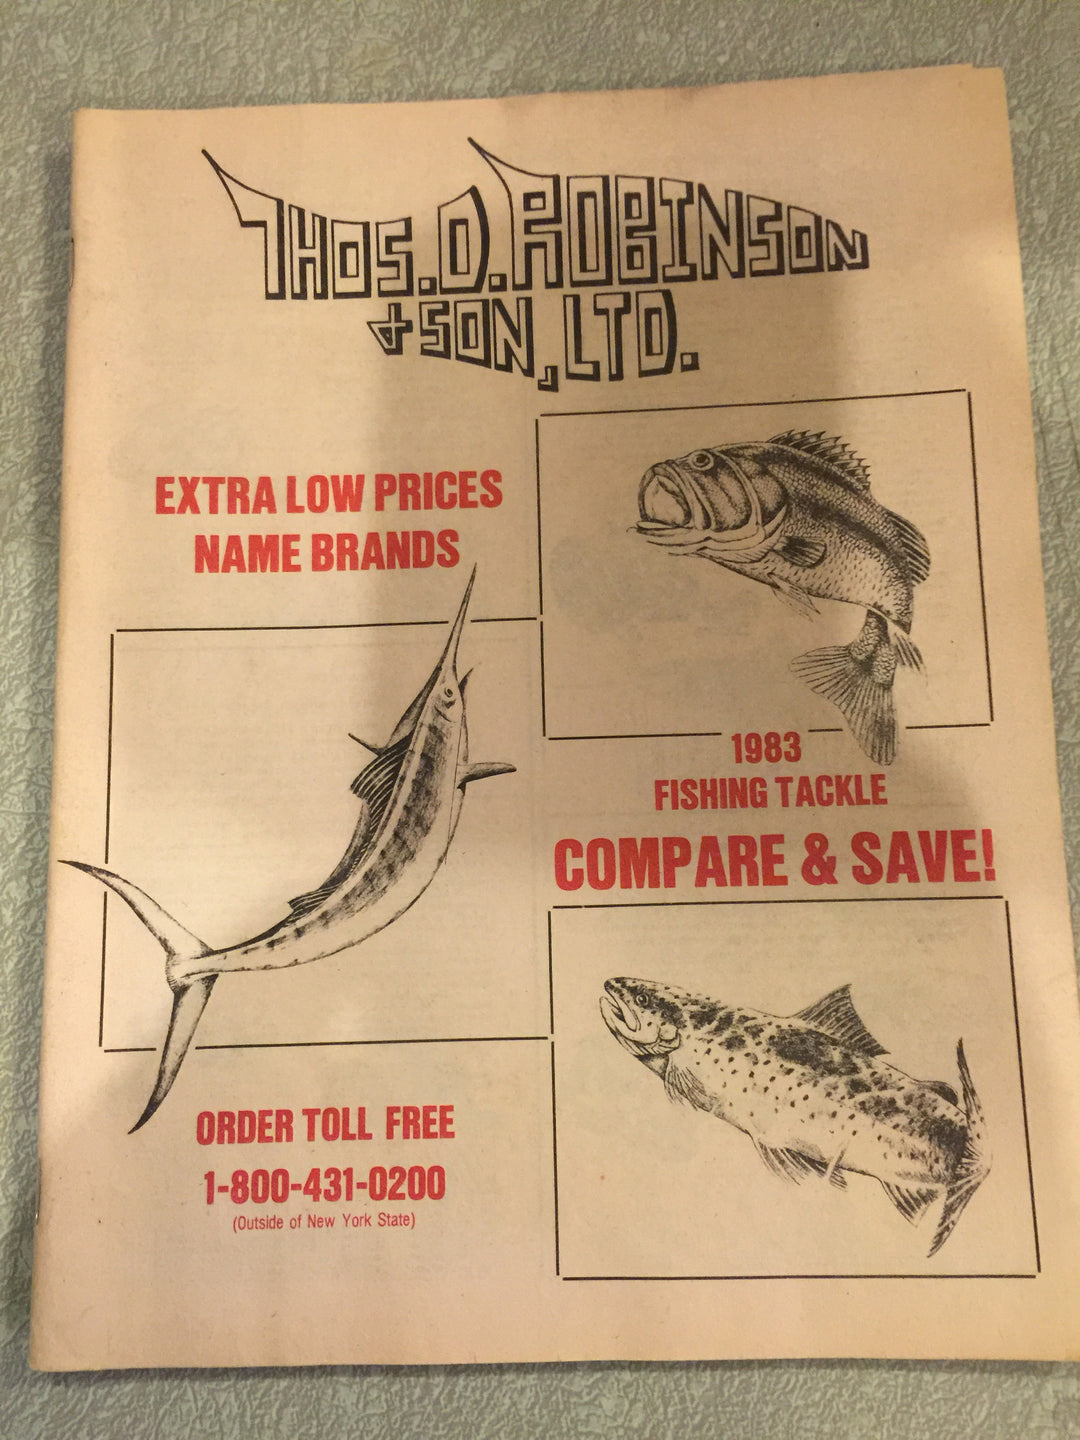 Thos. D. Robinson & Son LTD 1983 Fishing Tackle Catalog